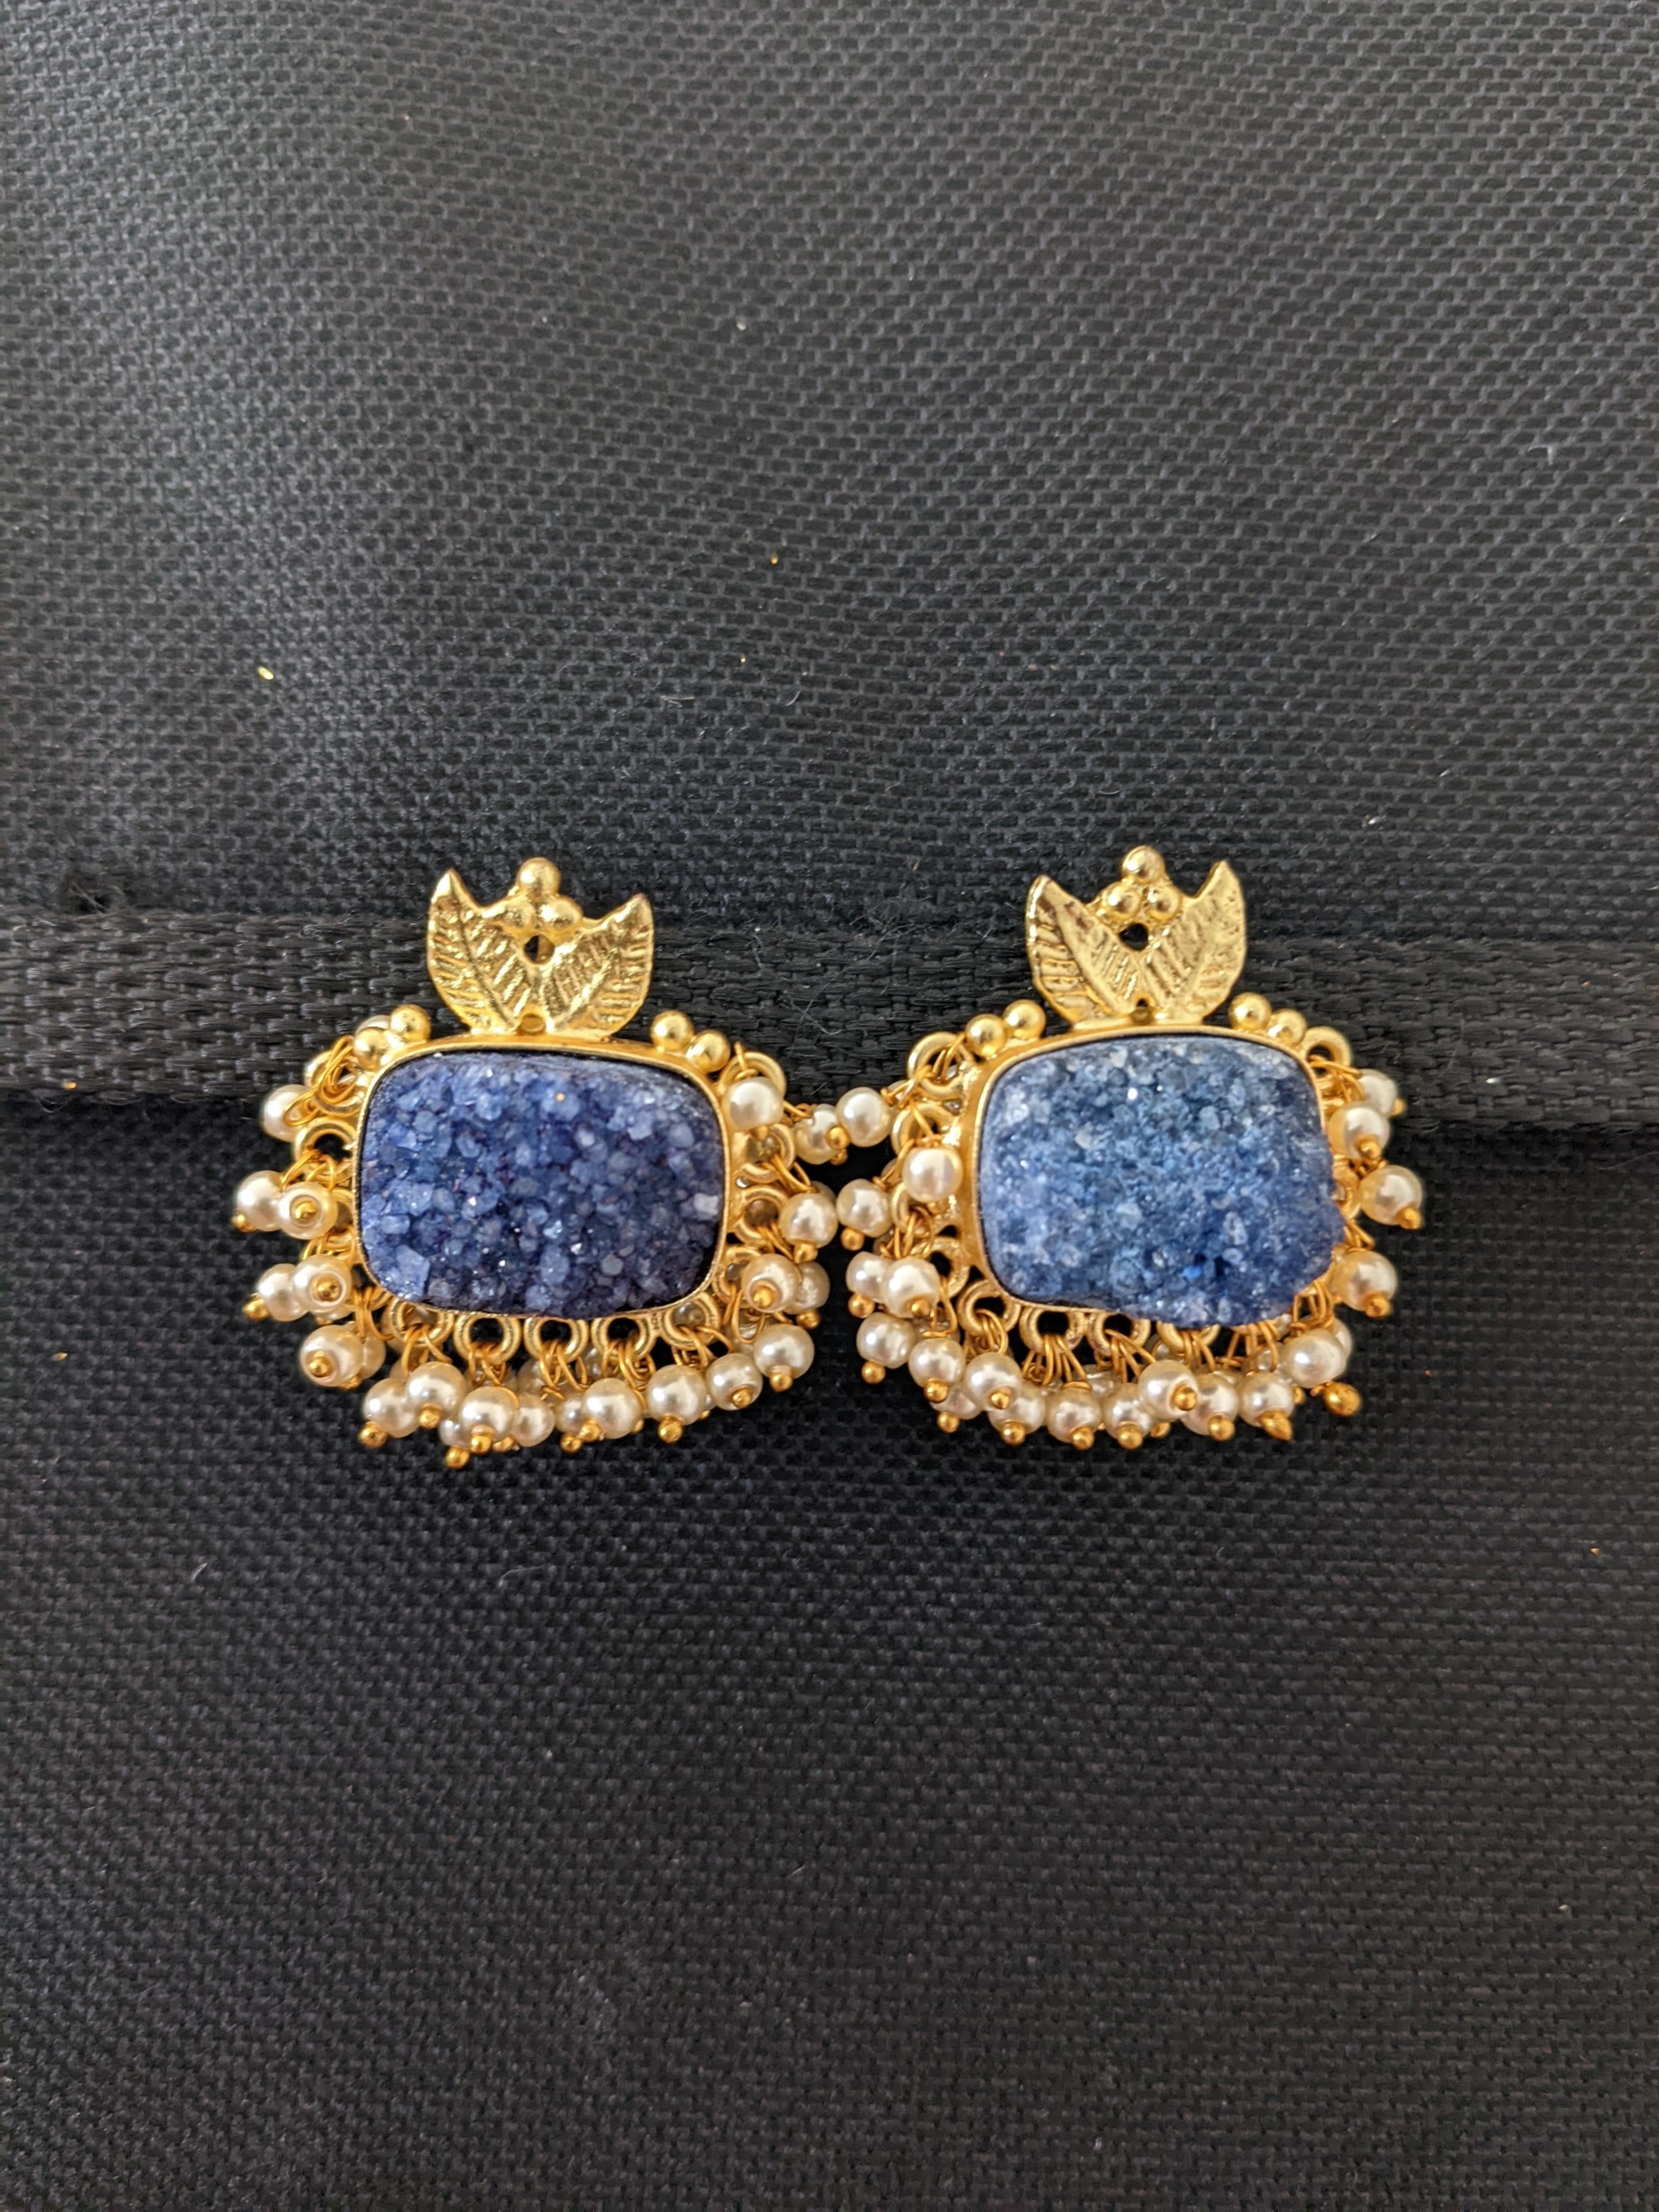 Purple Crazy Lace Agate Earrings Natural Stone Earrings Boho Dangle Earrings  Amethyst Gemstone Silver Earrings Festival Jewelry for Women - Etsy